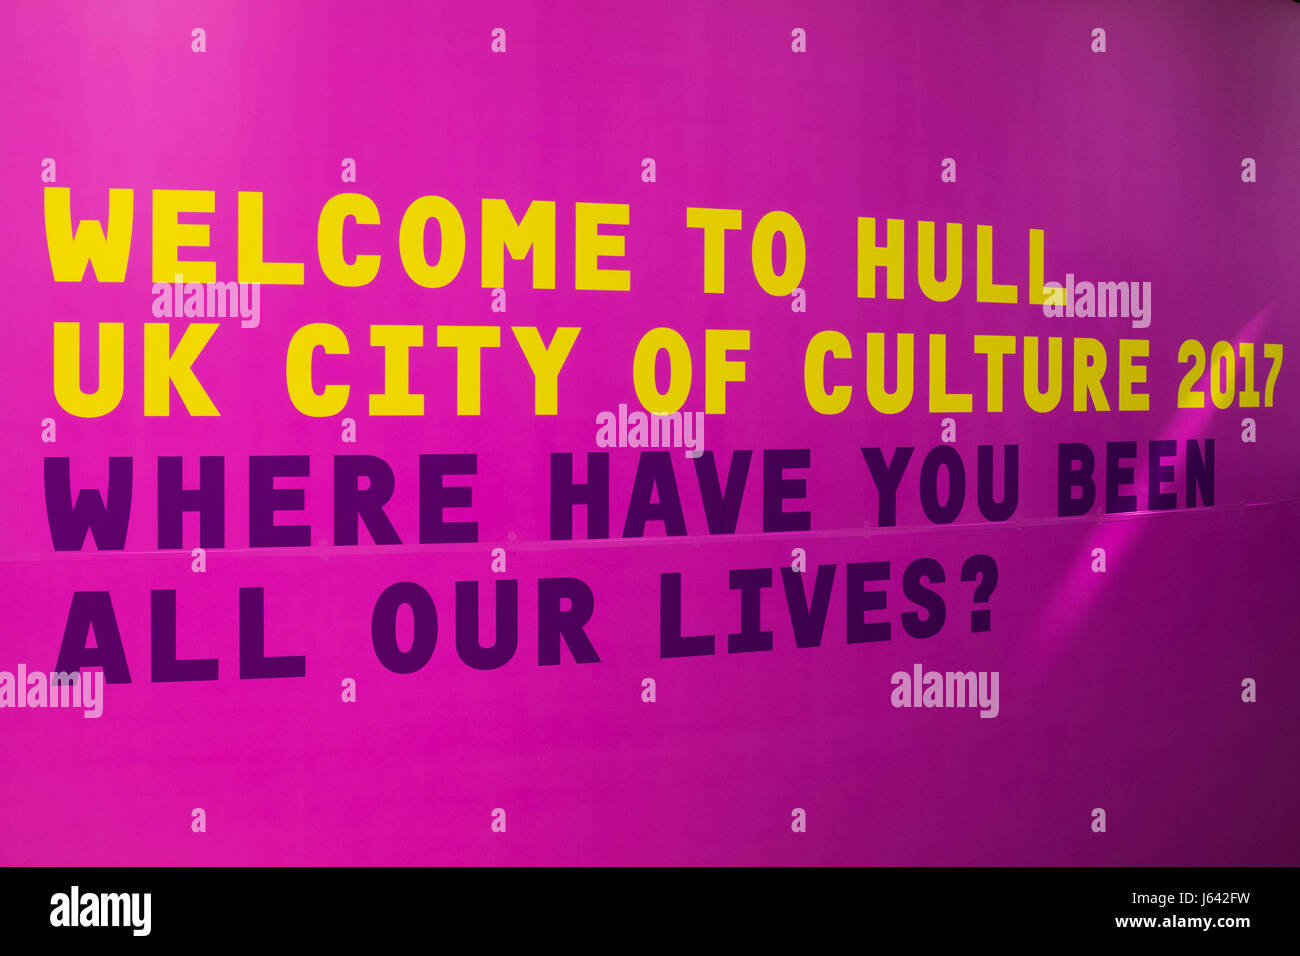 Hull 2017 UK City of Culture, Kingston Upon Hull, Yorkshire, England, U.K. Stock Photo